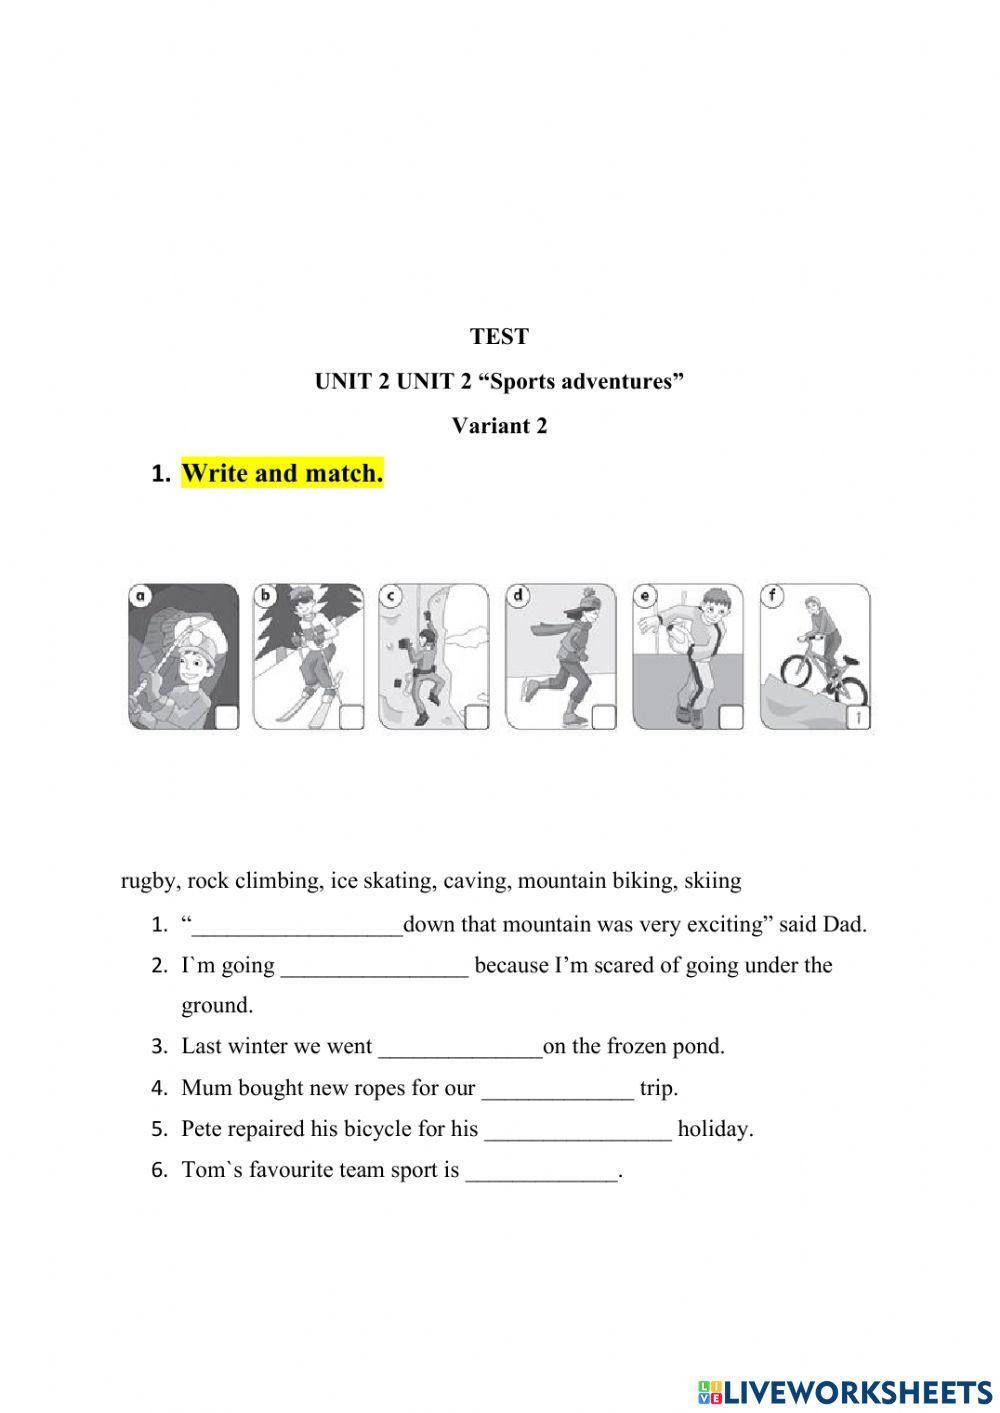 6th grade reading comprehension test